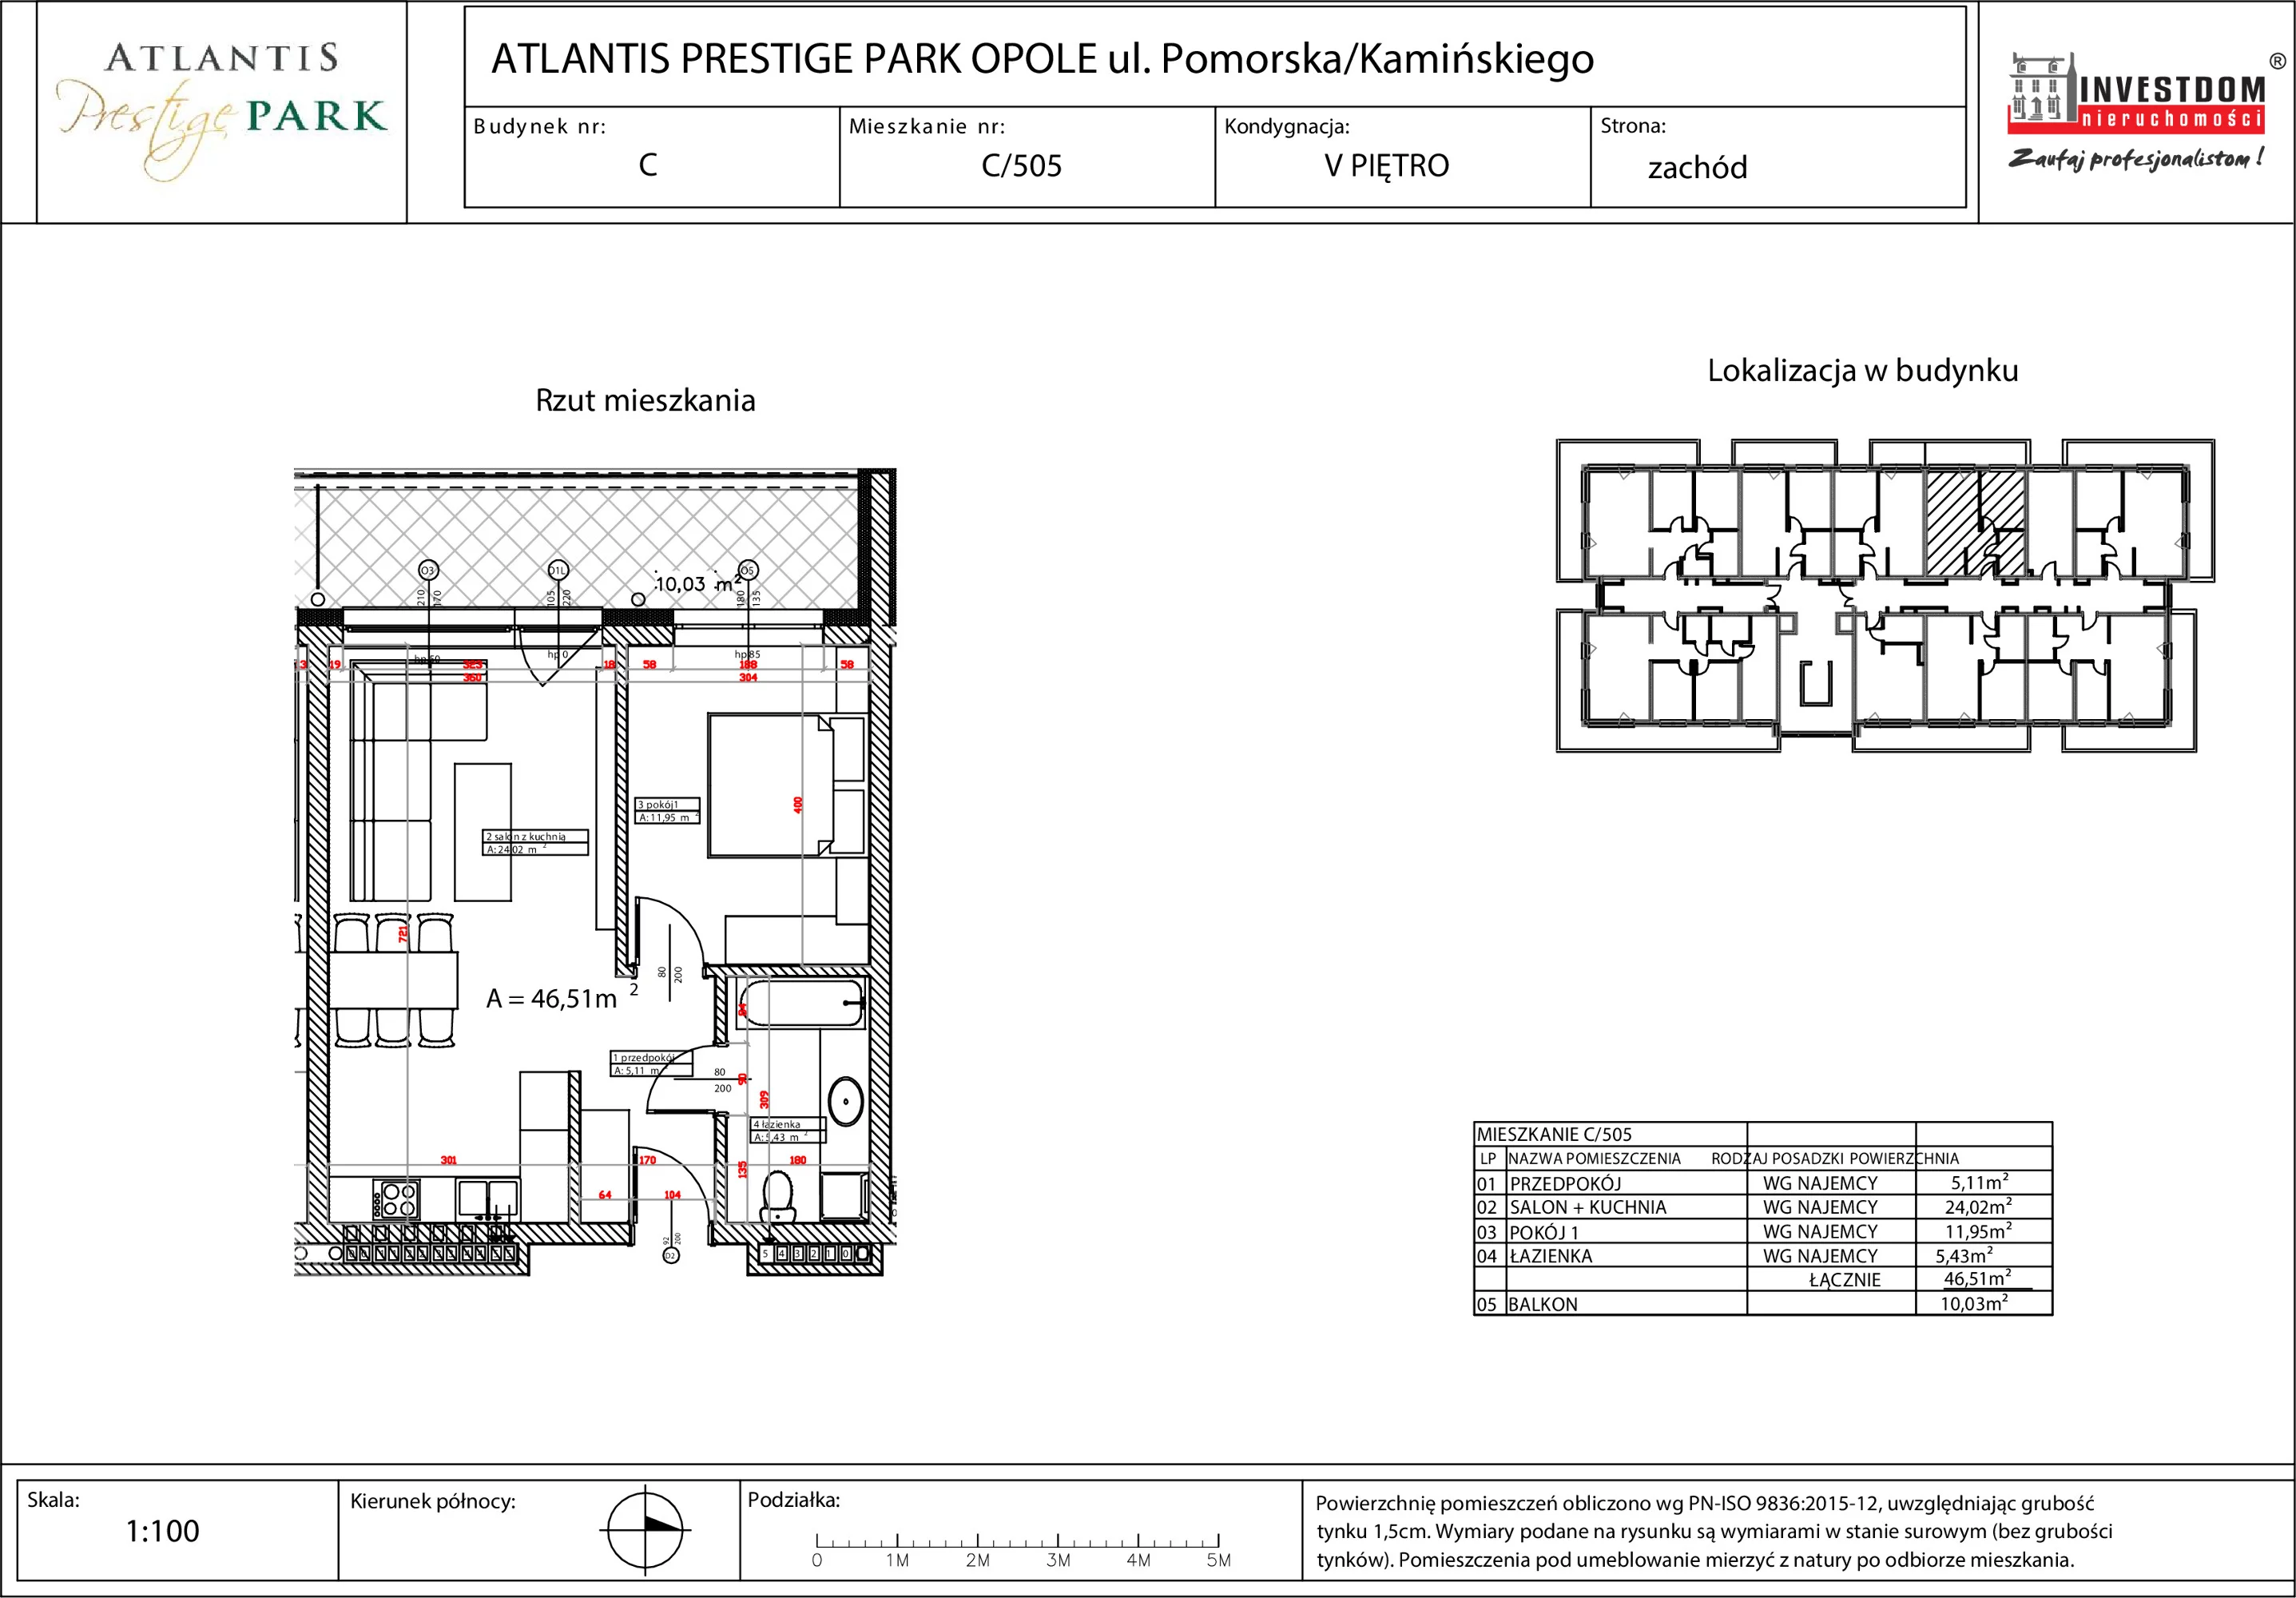 Apartament 46,51 m², piętro 5, oferta nr C/505, Atlantis Prestige Park, Opole, Malinka, ul. Pomorska / Zielonogórska / Harcmistrza Kamińskiego